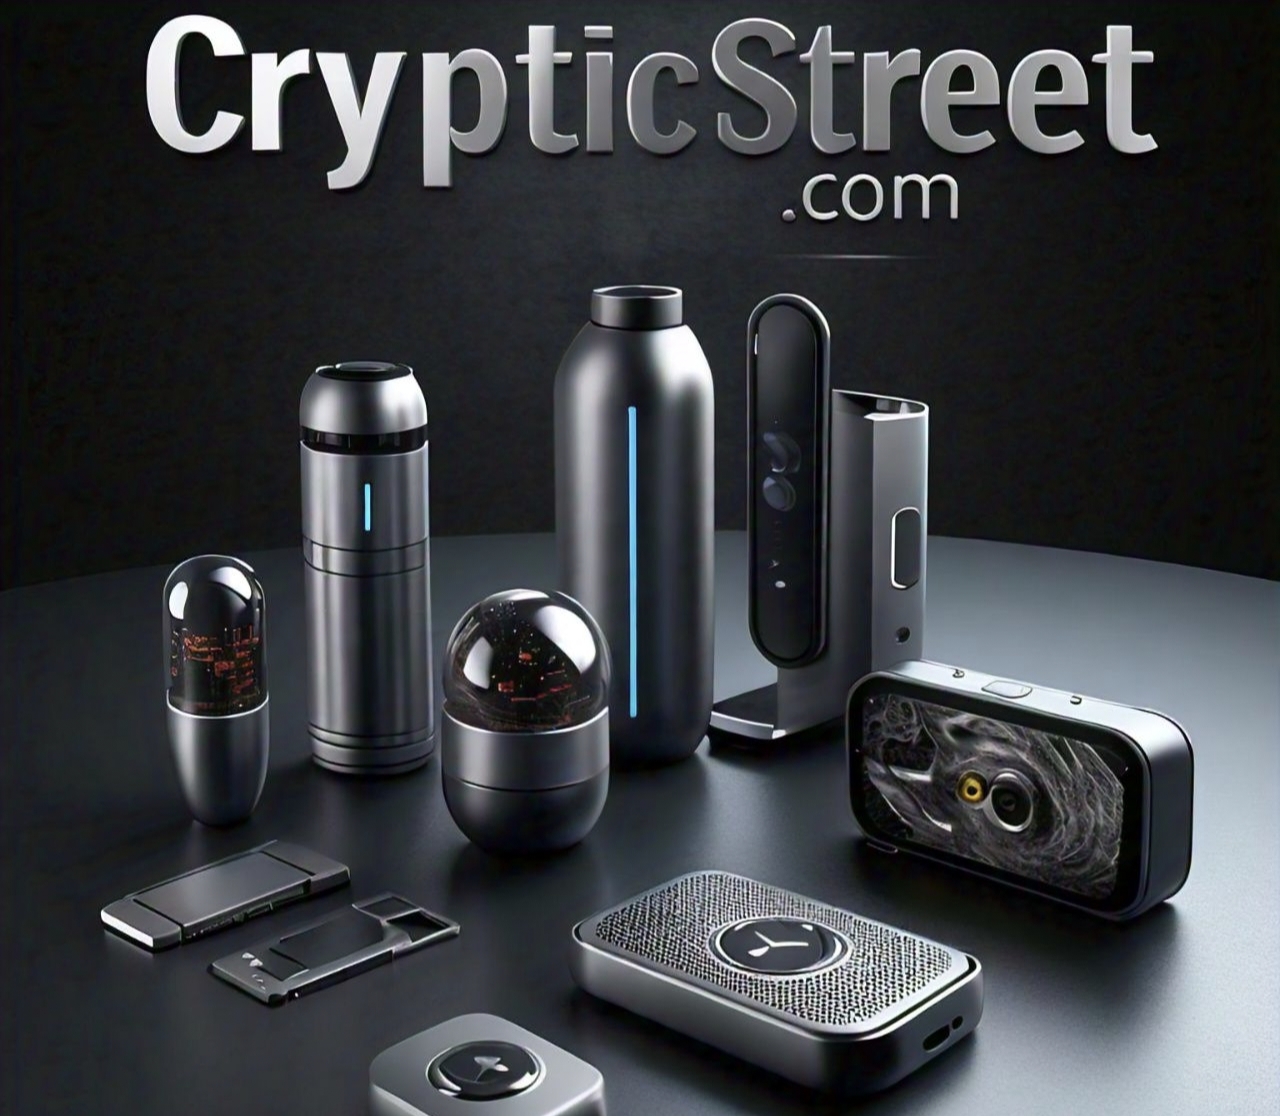 CrypticStreet.com Gadgets: A Comprehensive Review and Guide